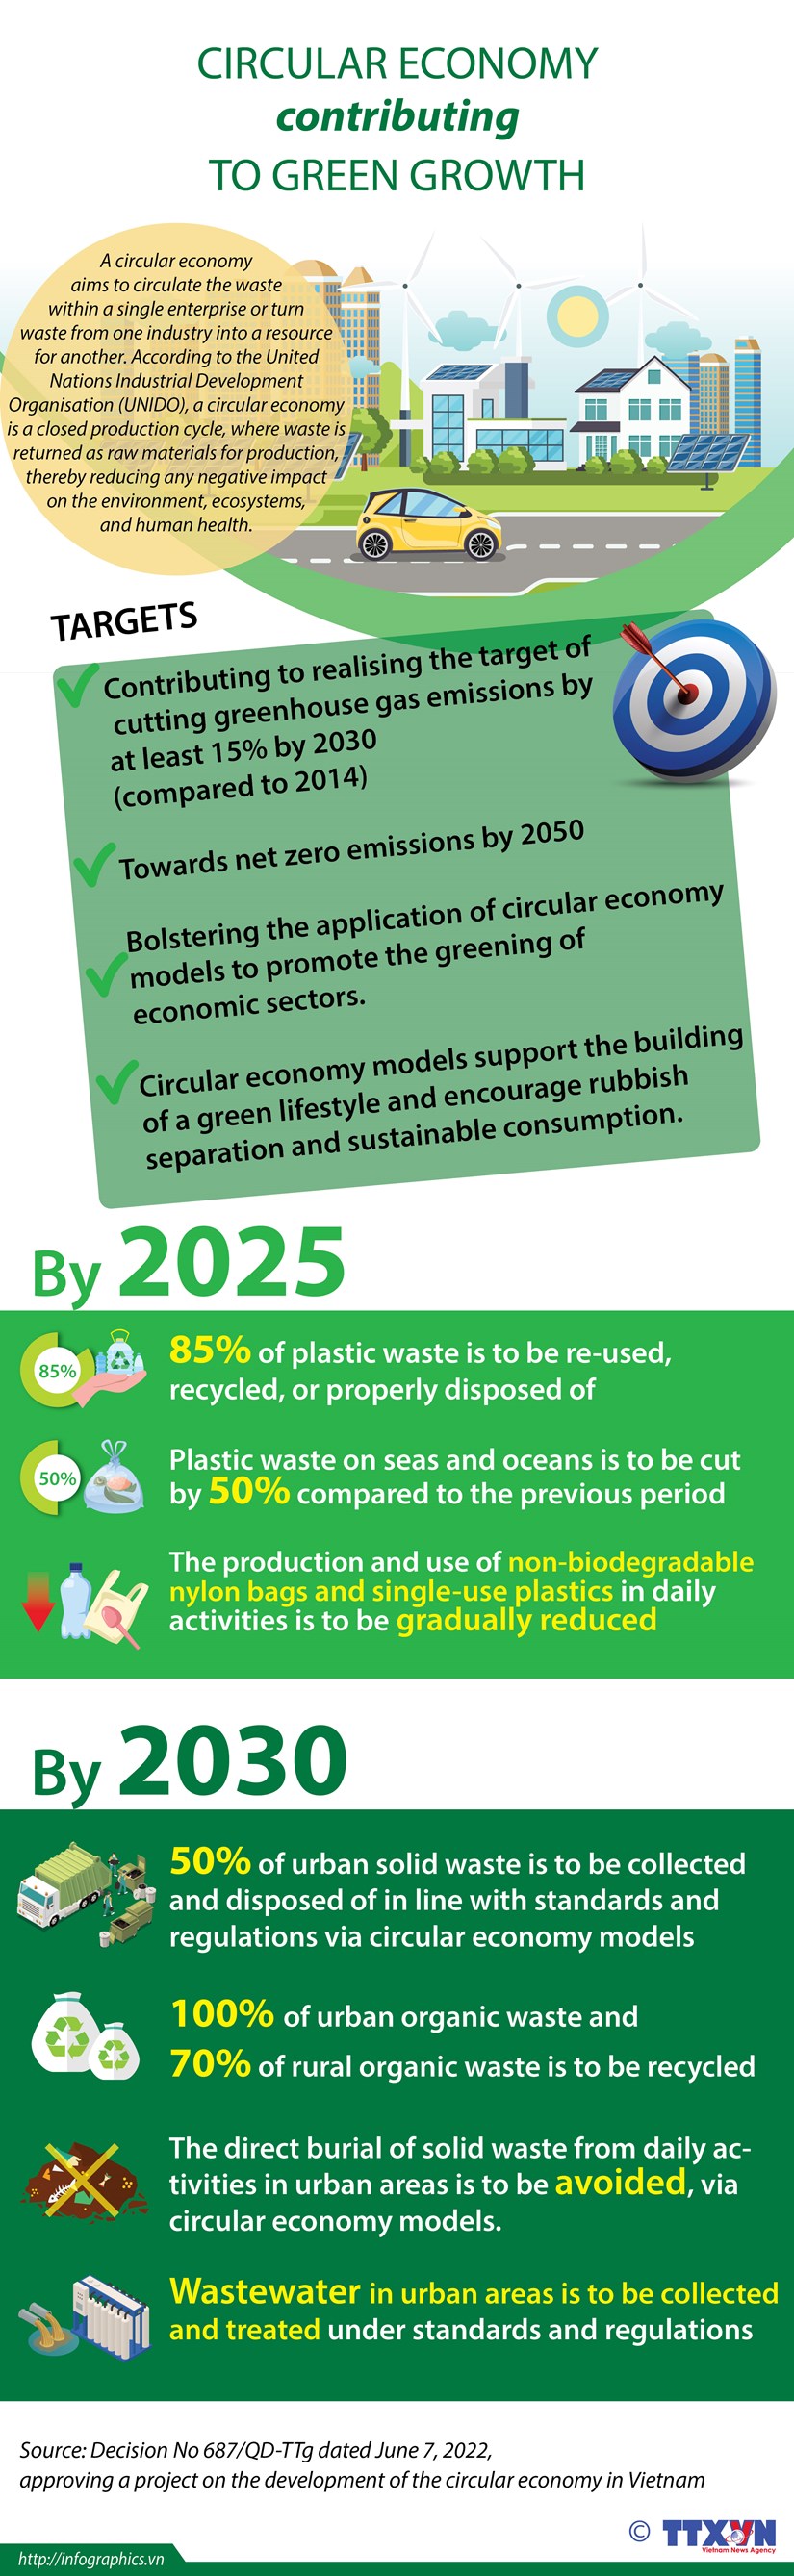 Circular economy contributing to green growth hinh anh 1